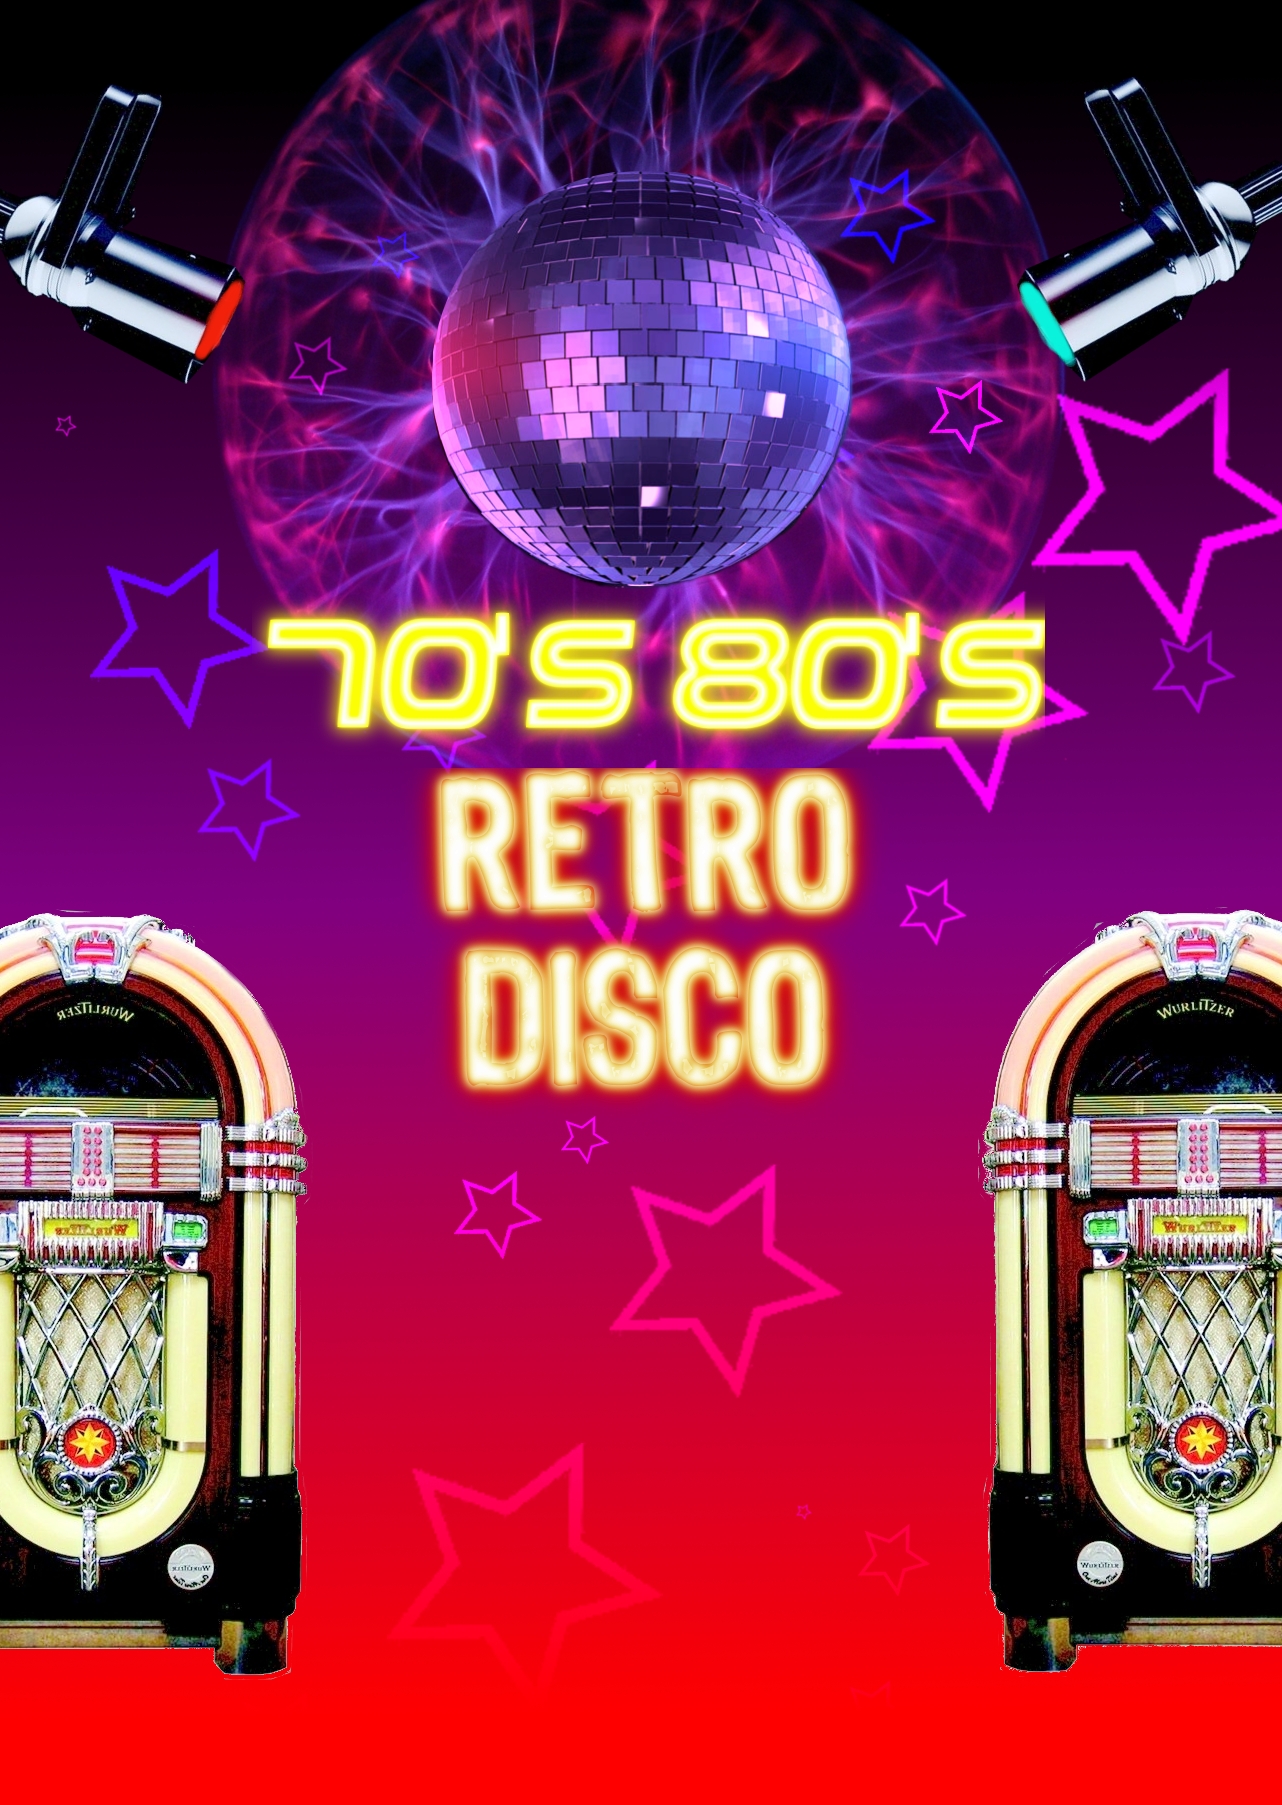 70s 80s Retro Disco by damid